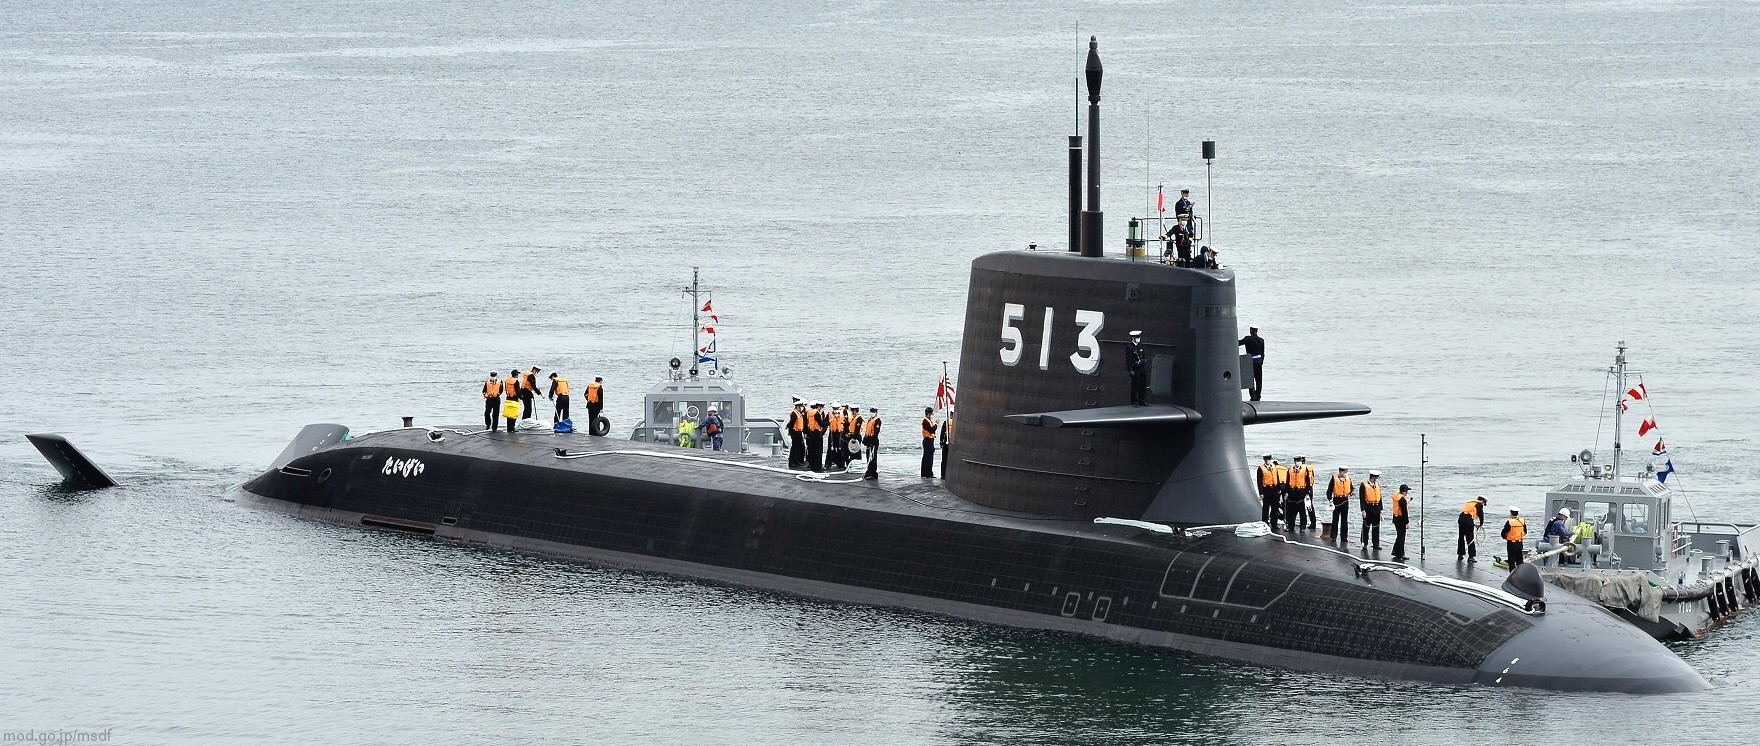 ss-513 js taigei 29ss class attack submarine ssk aip japan maritime self defense force jmsdf 14